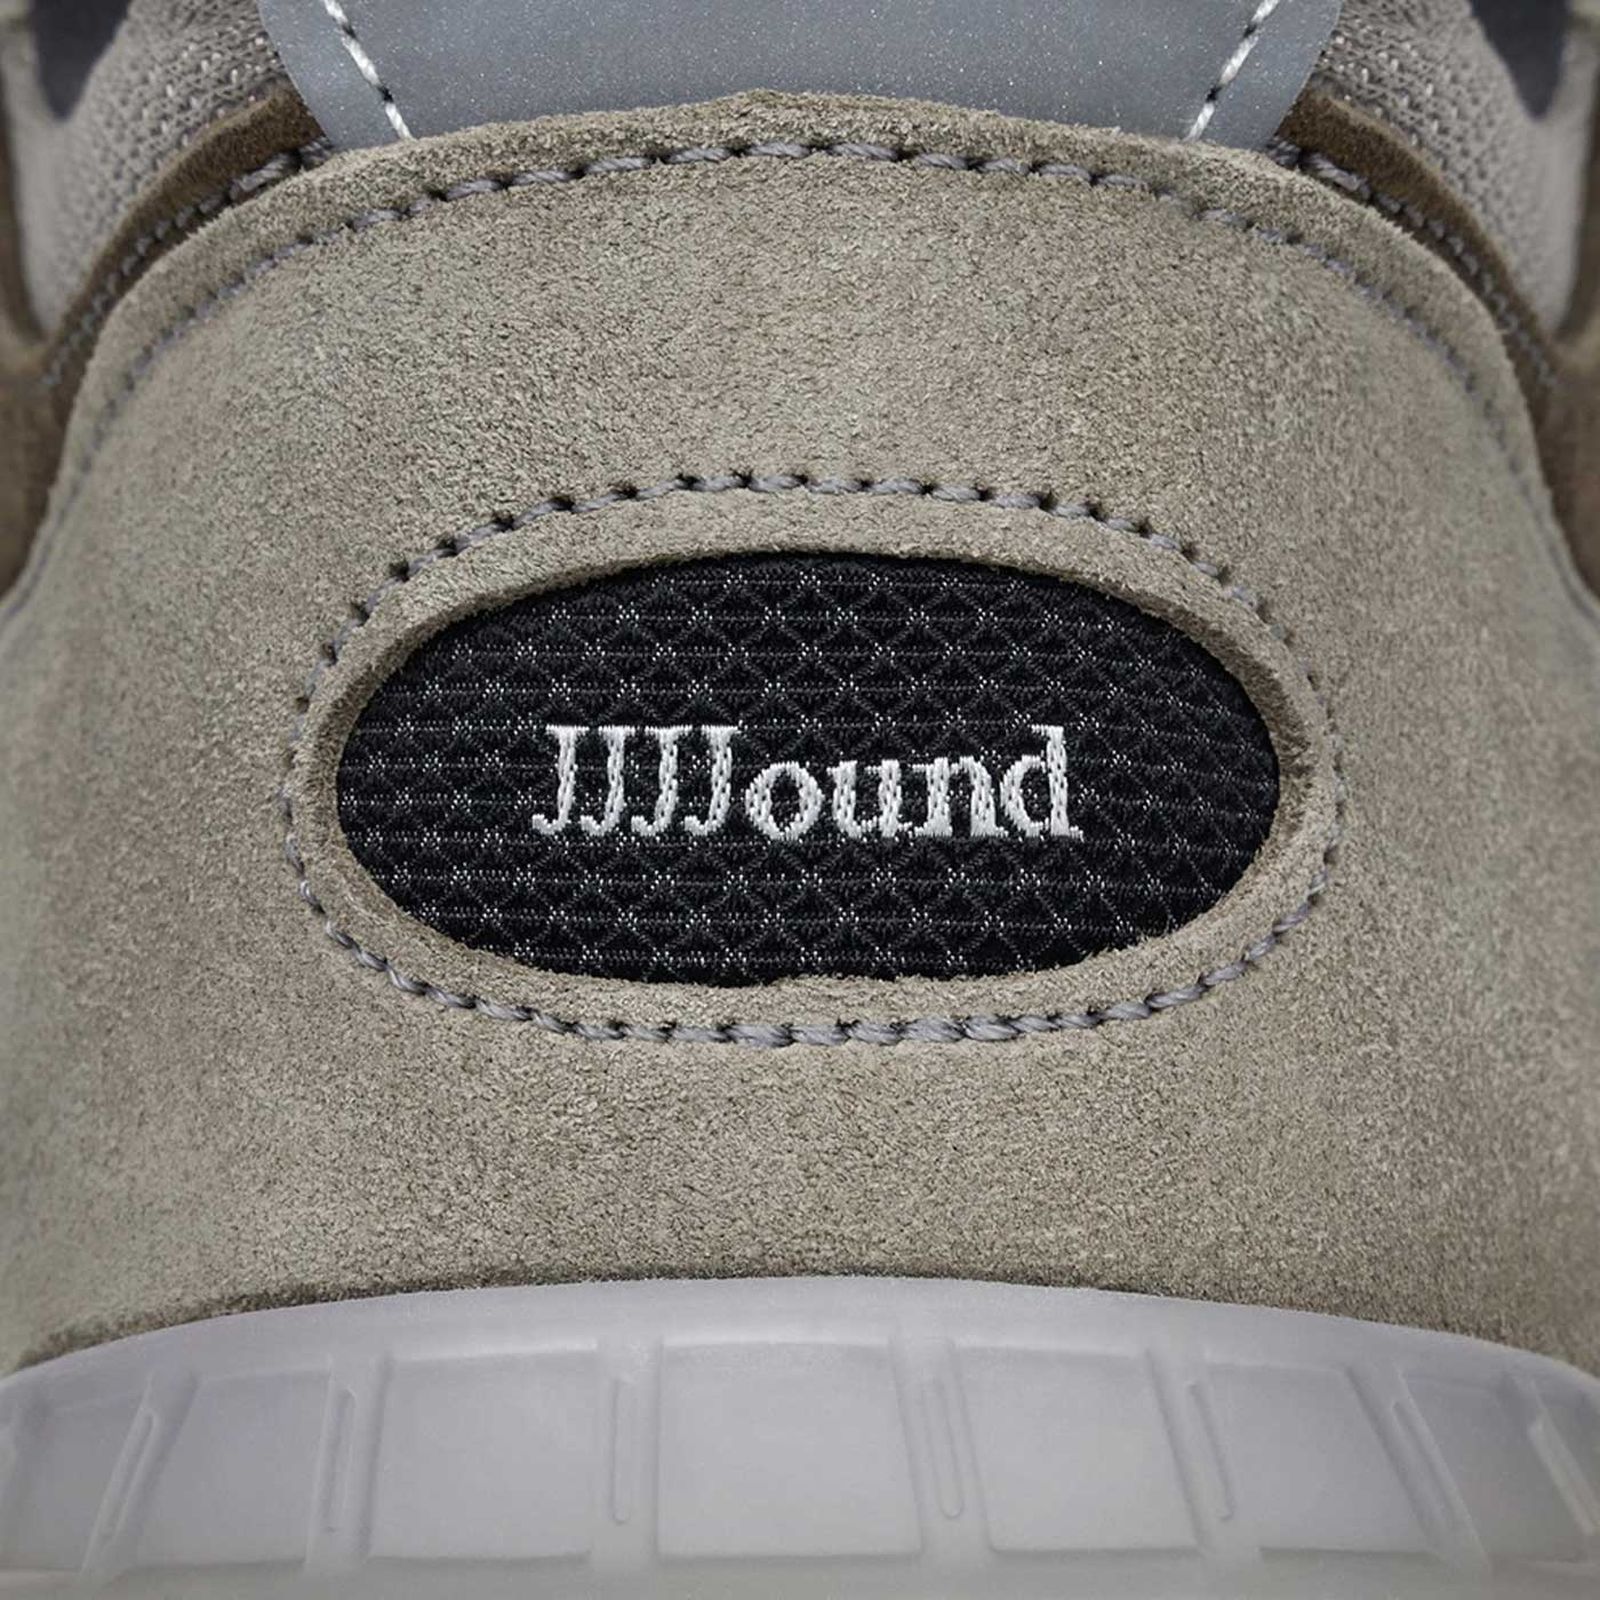 JJJJound & New Balance Finally Drop 991 Sneaker Collab